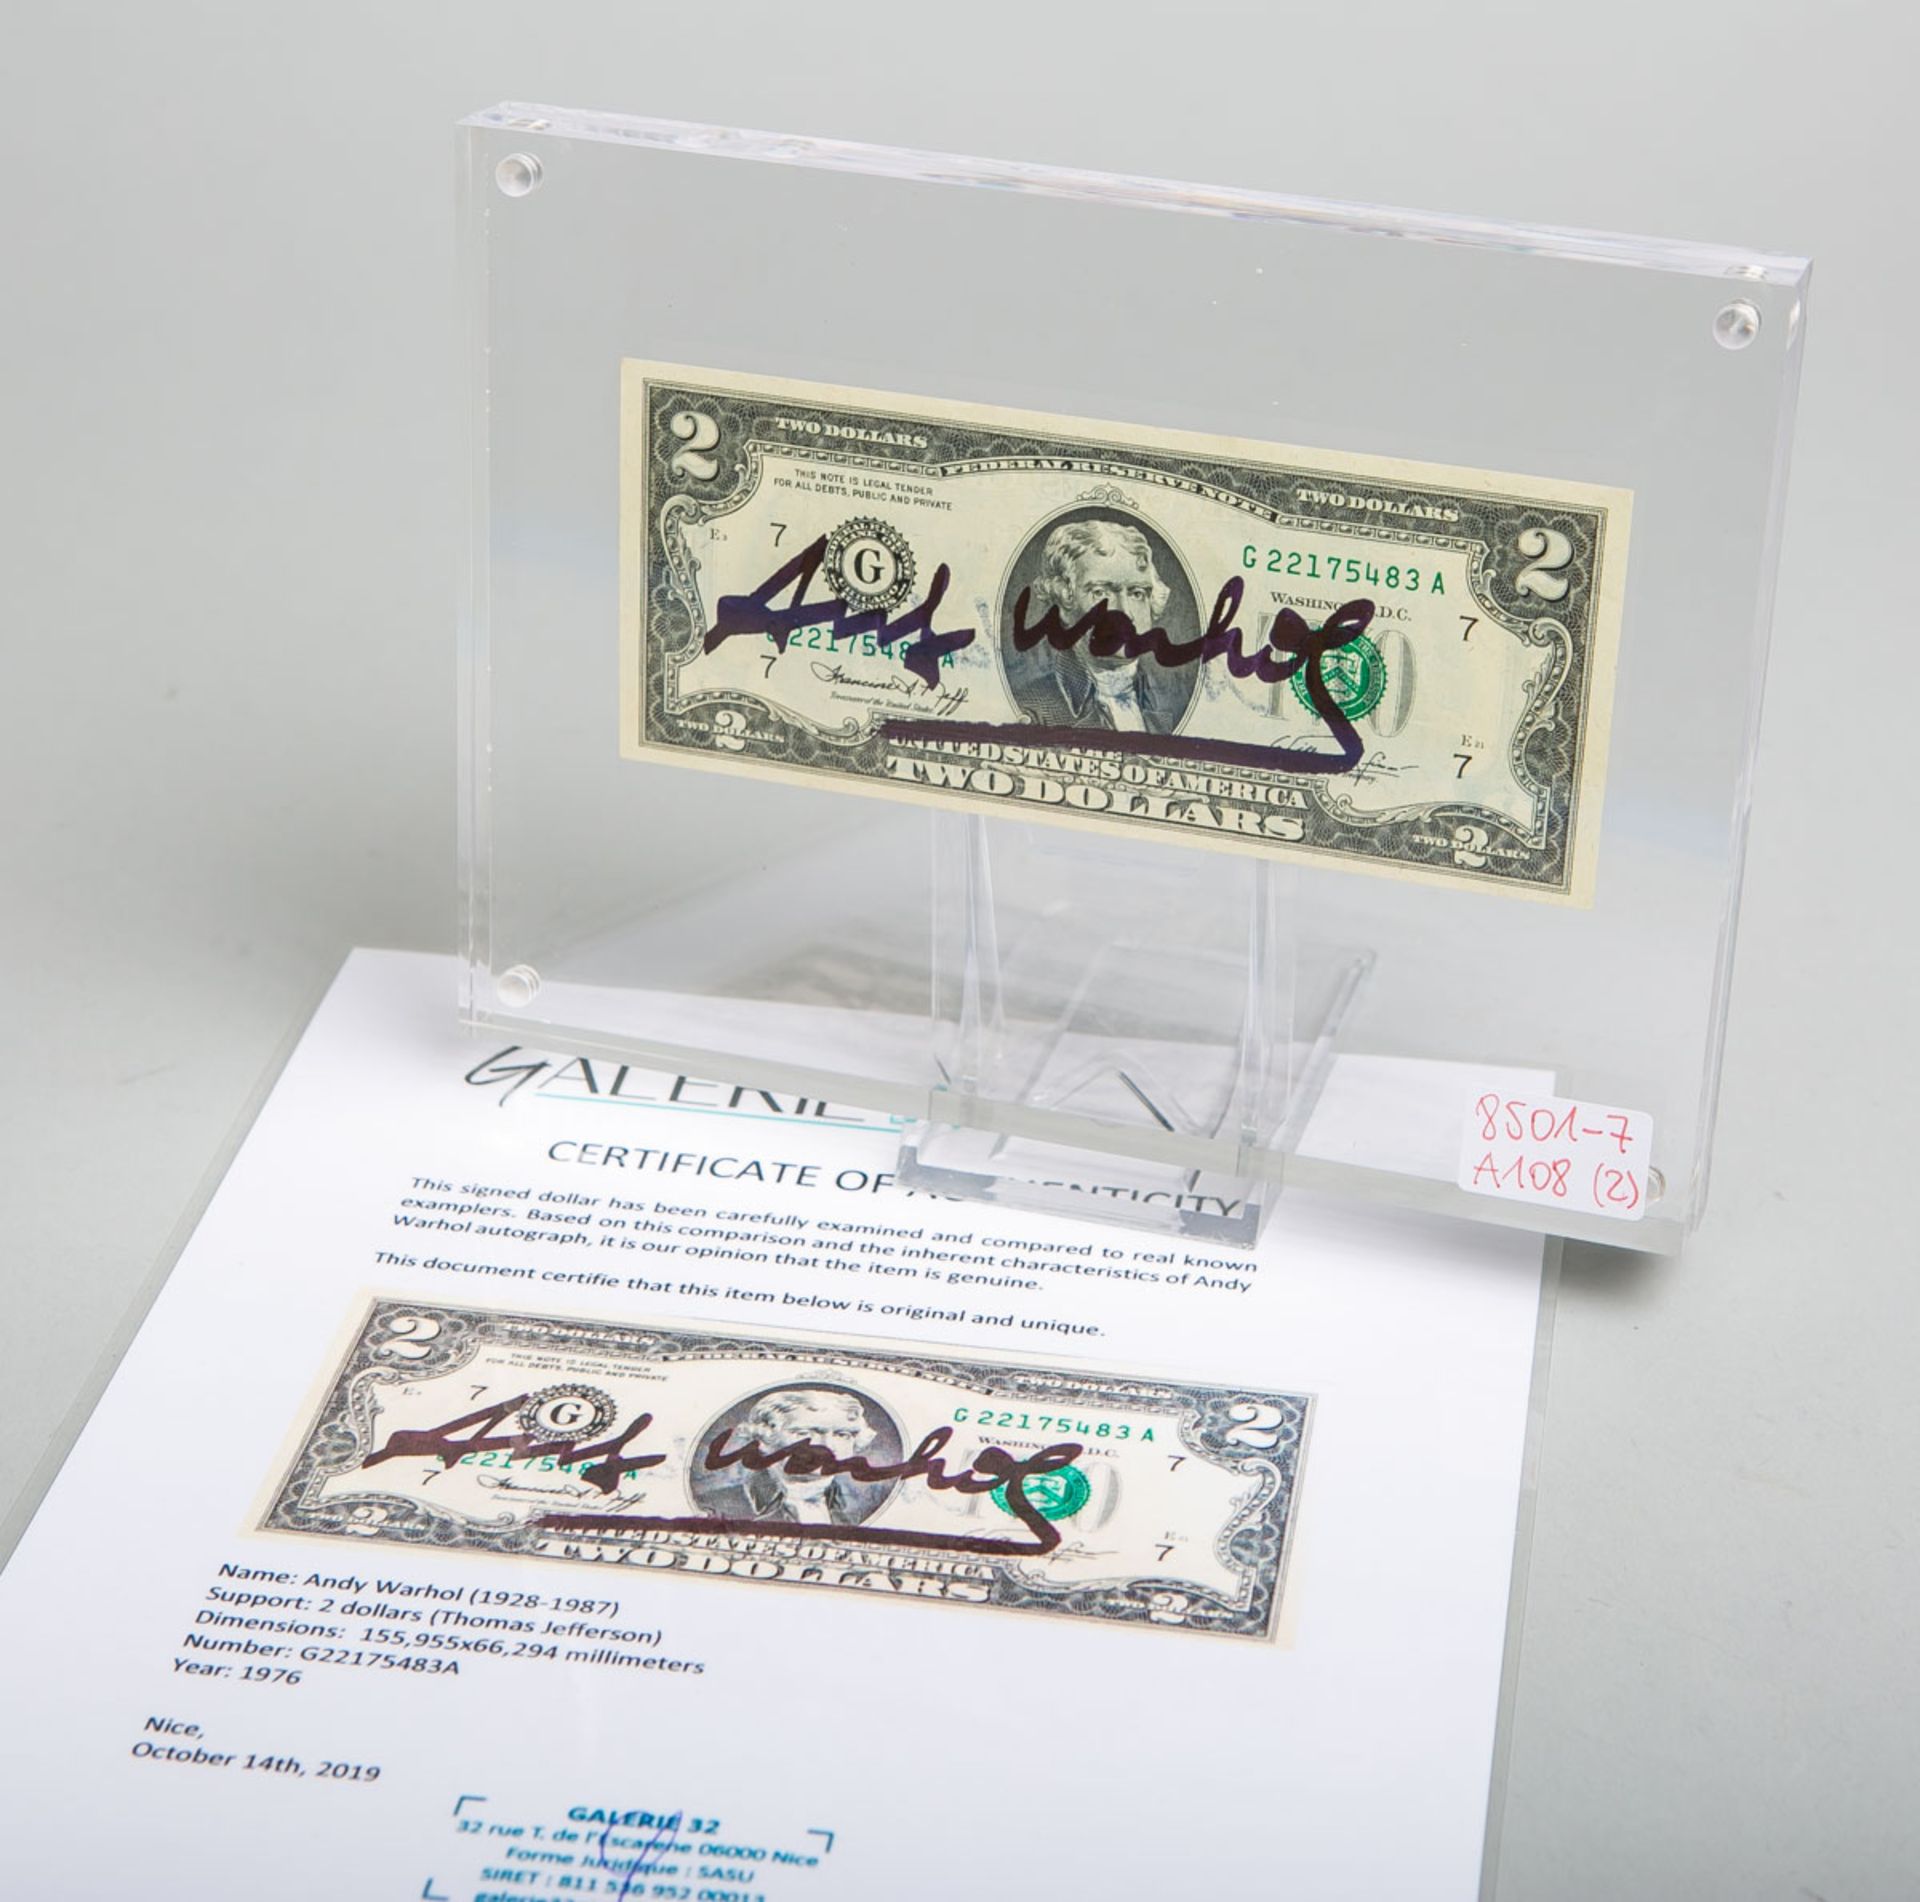 Warhol, Andy (1928 - 1987), "2 USD (Thomas Jefferson)" (1976)